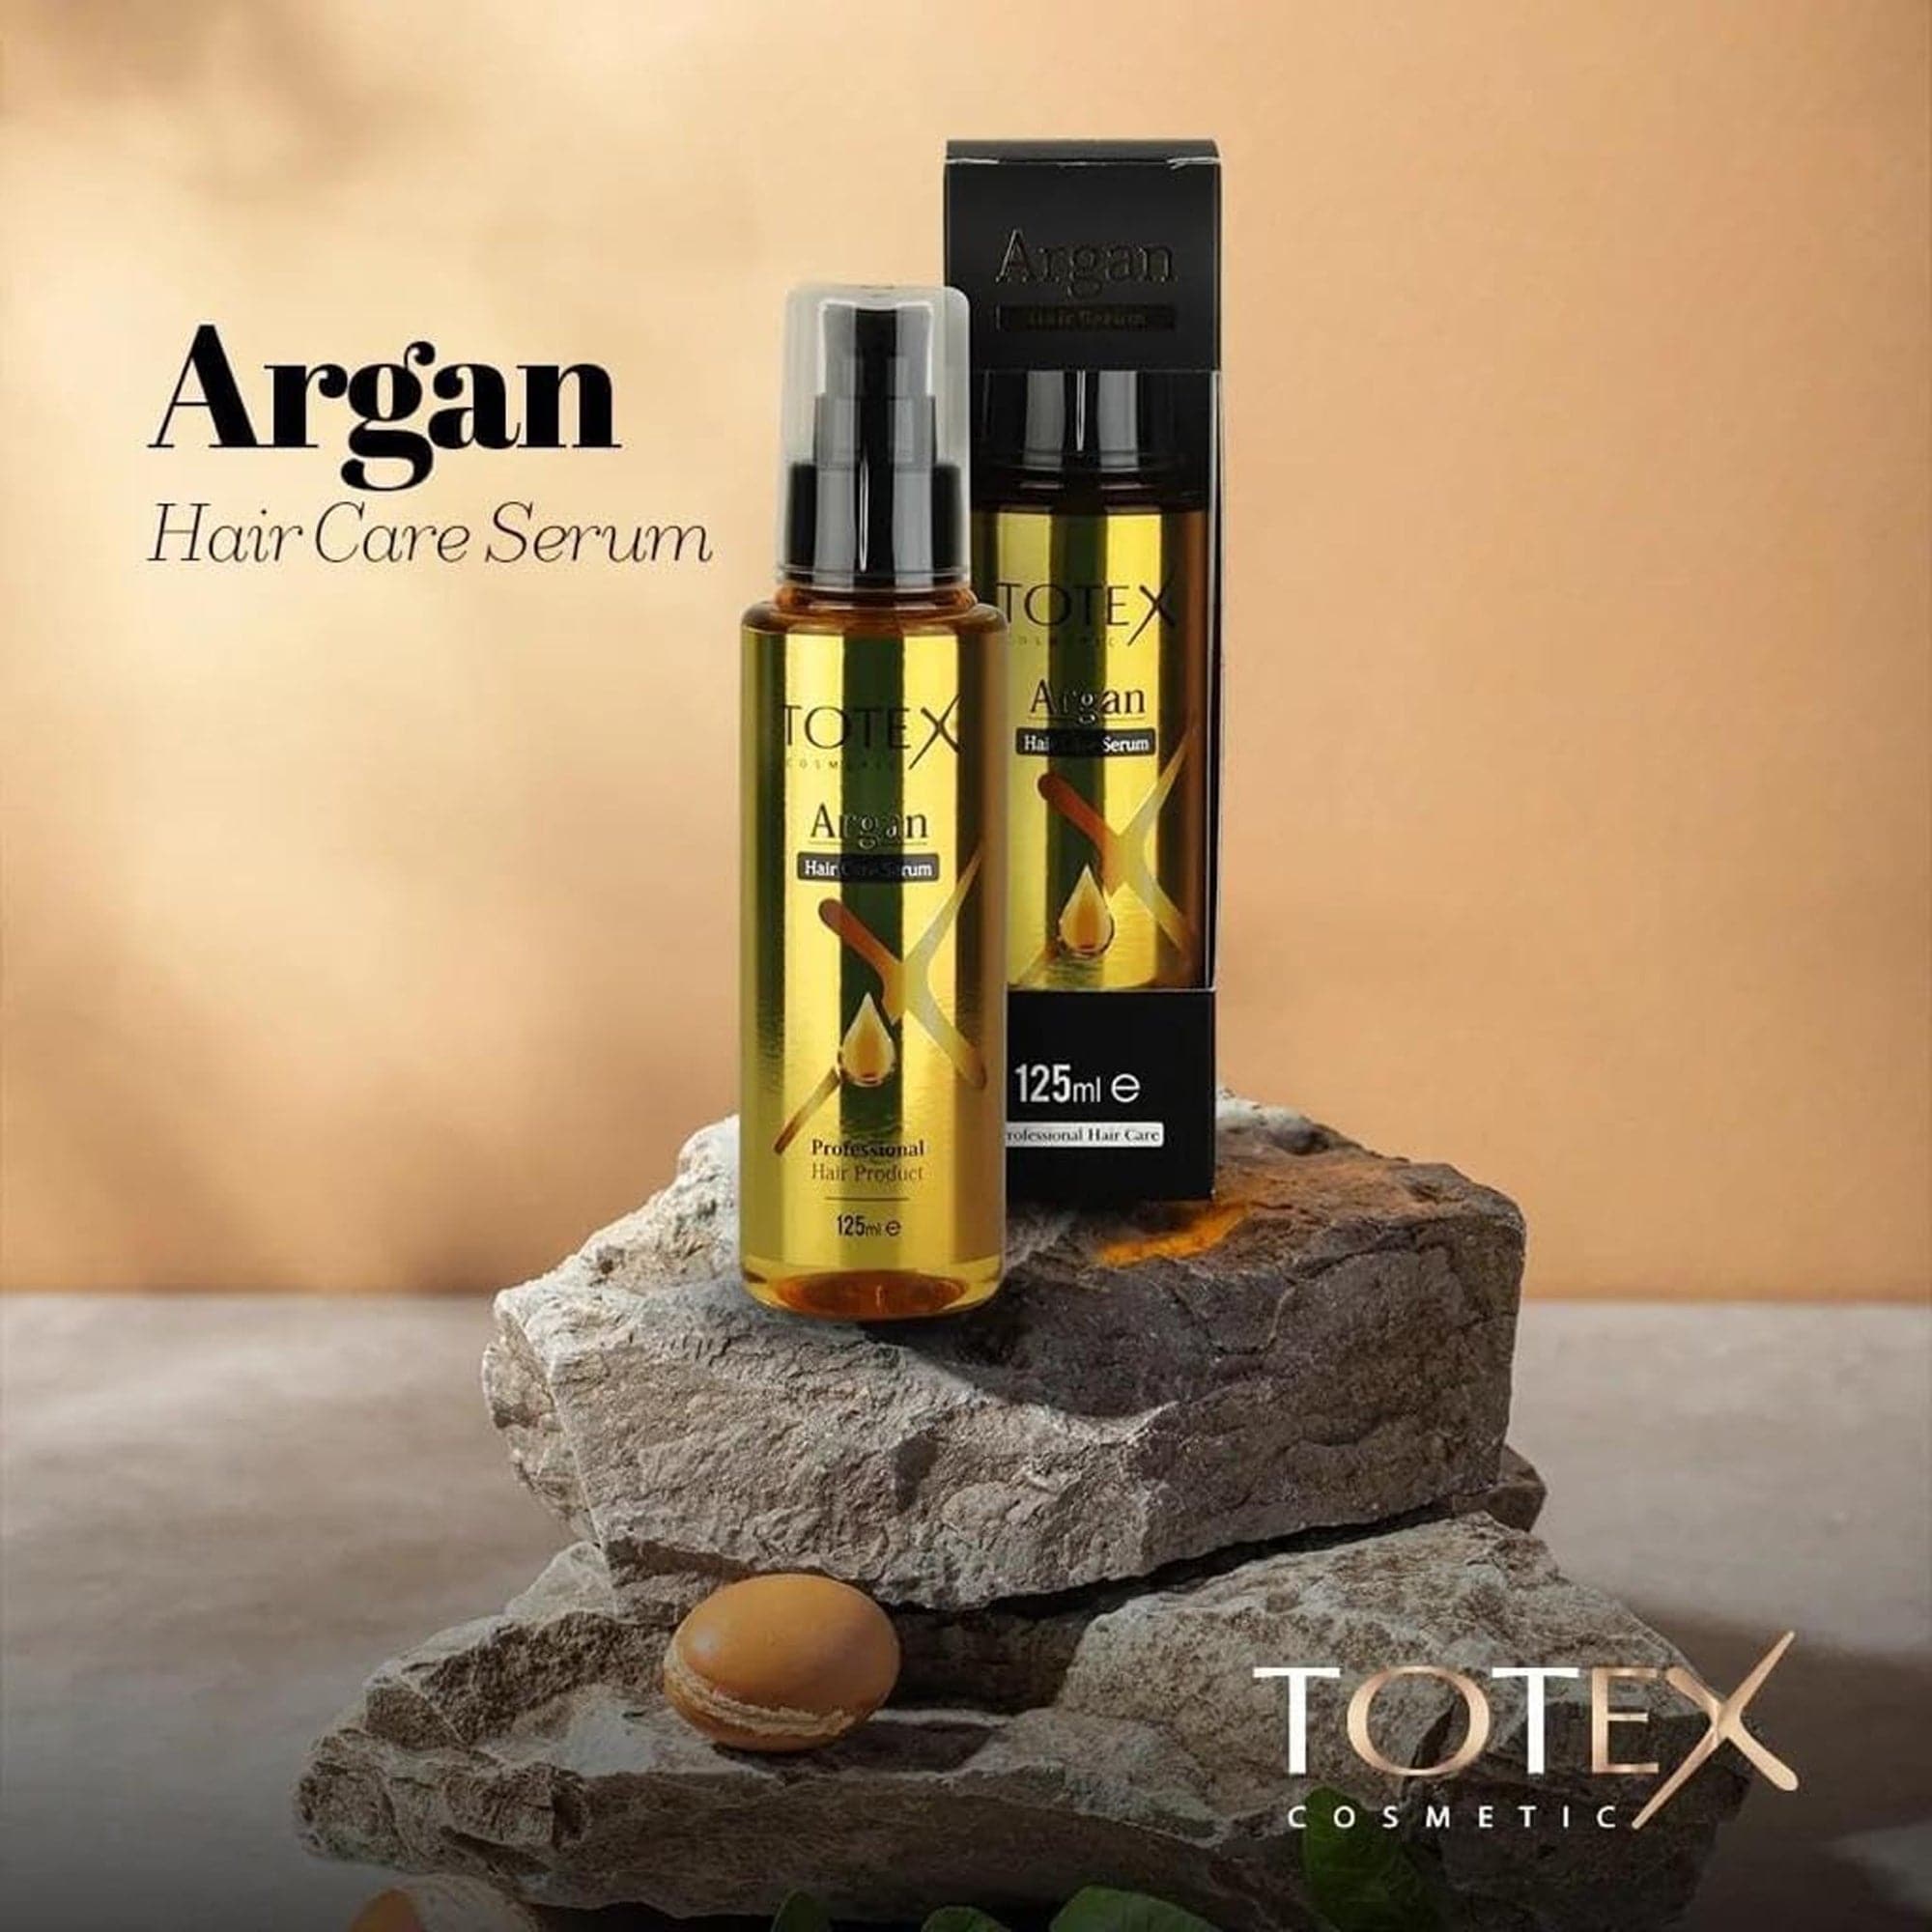 Totex - Hair Care Serum Argan 125ml